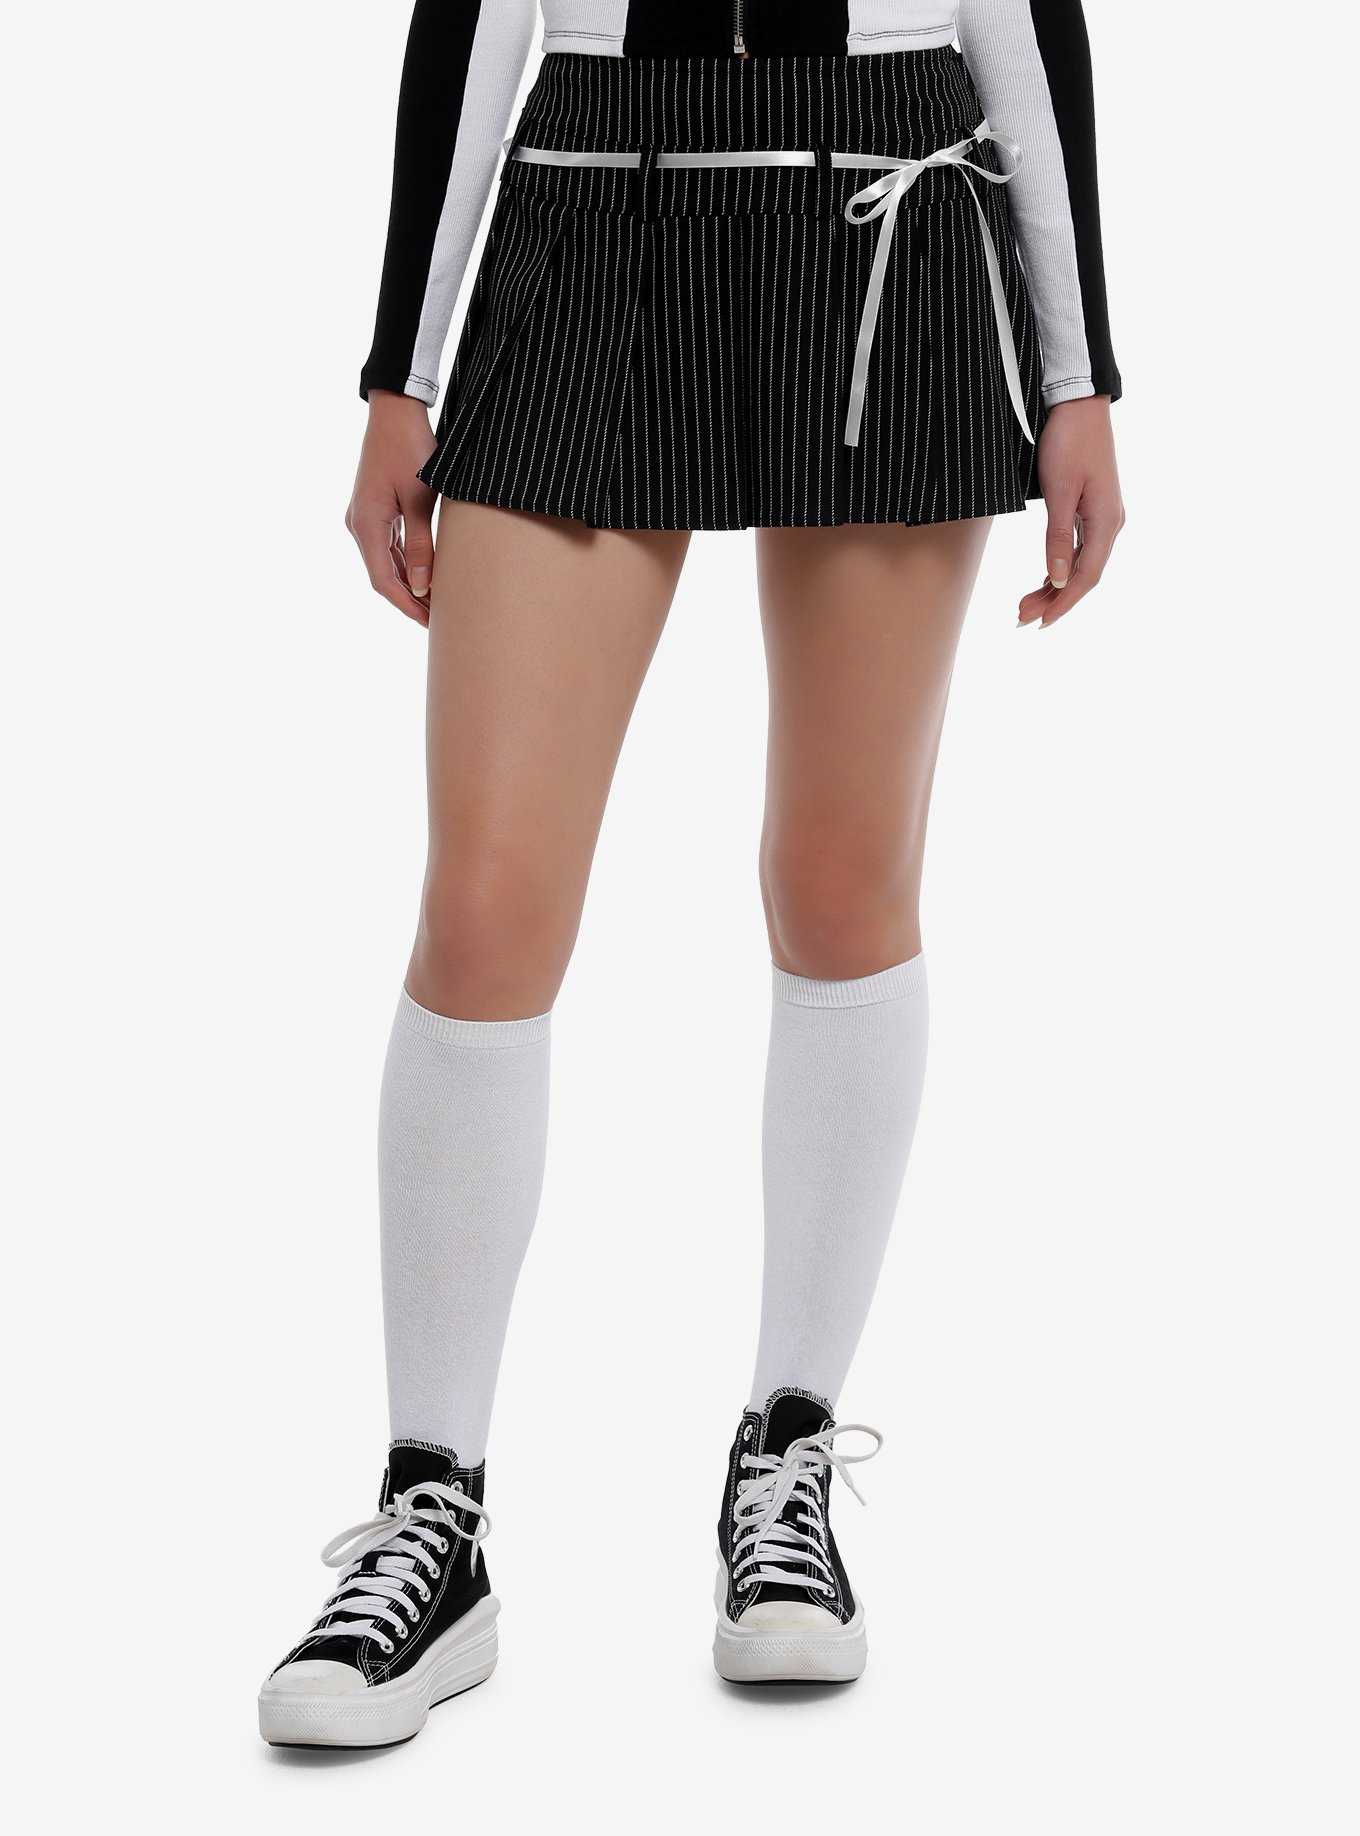 Sweet Society® Black & White Pleated Pinstripe Ribbon Skirt, , hi-res